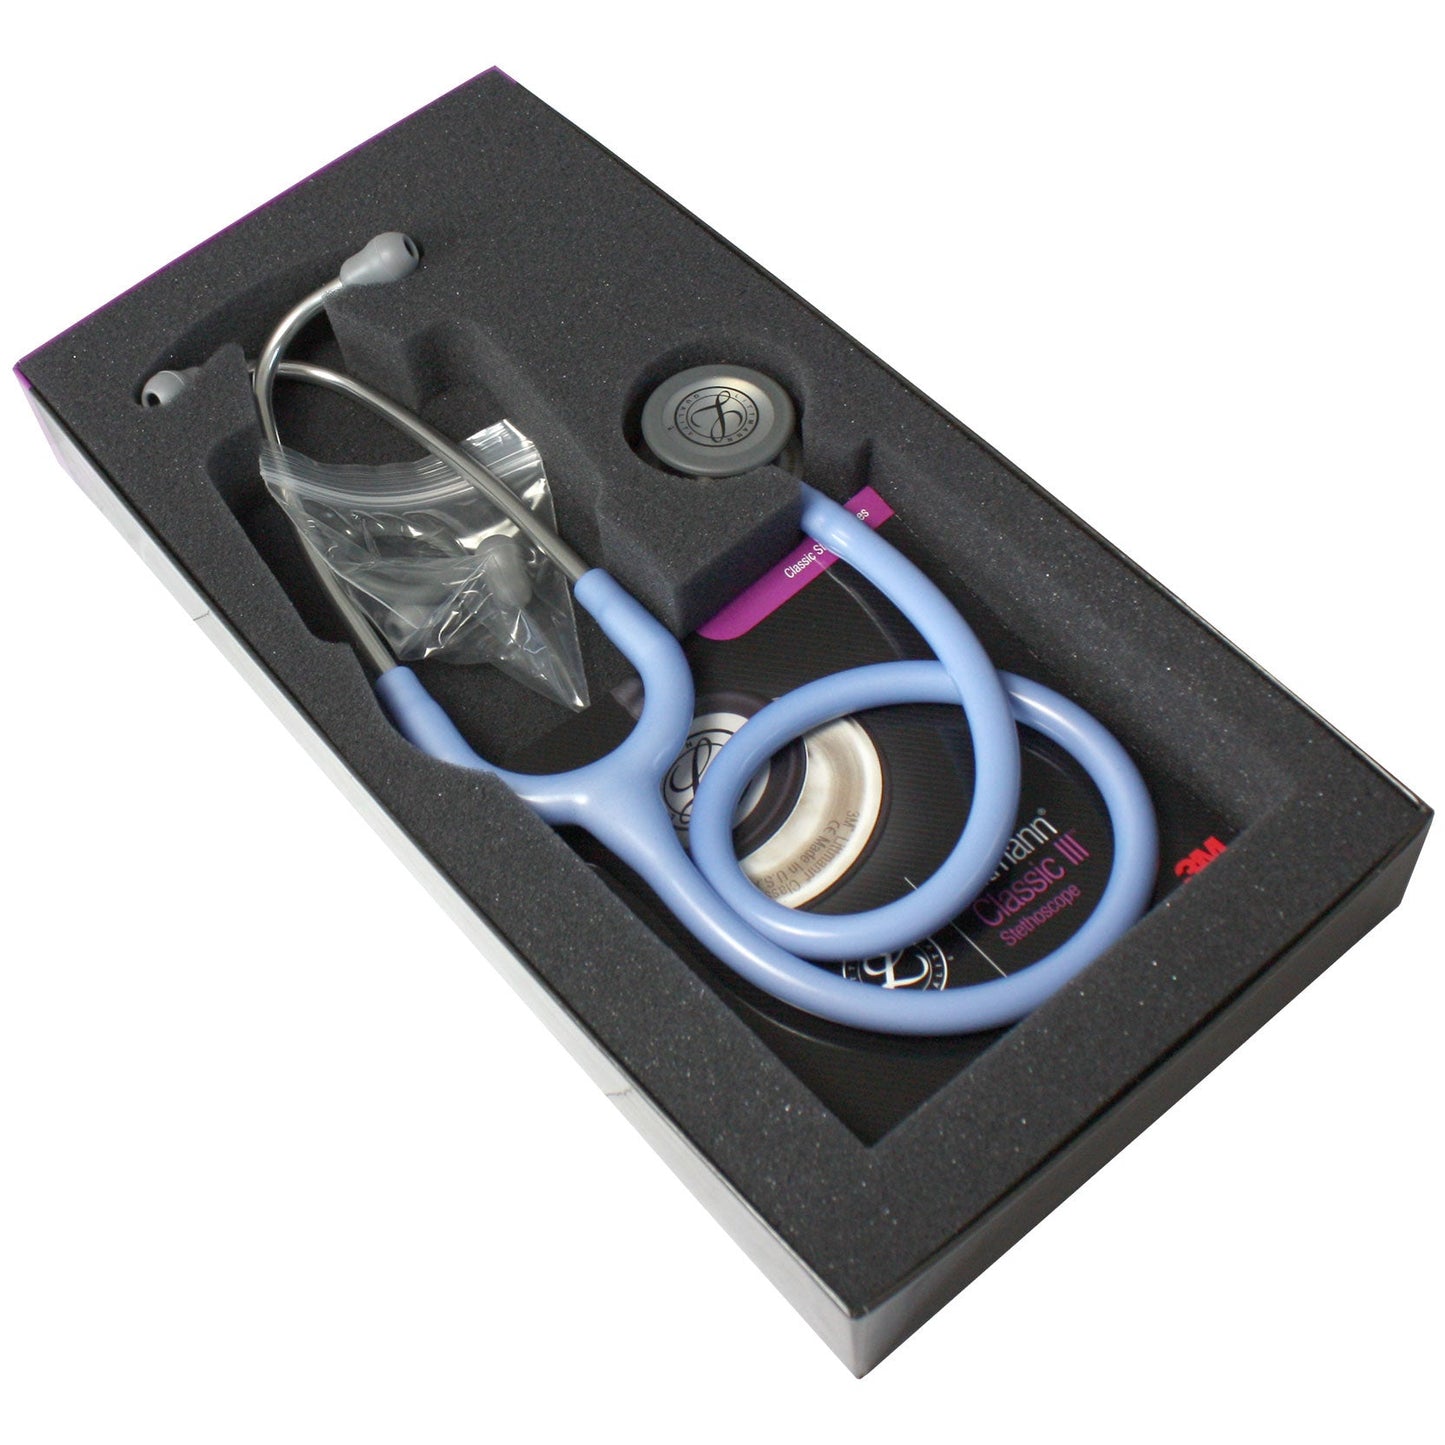 Littmann Classic III Monitoring Stethoscope: Ceil Blue 5630